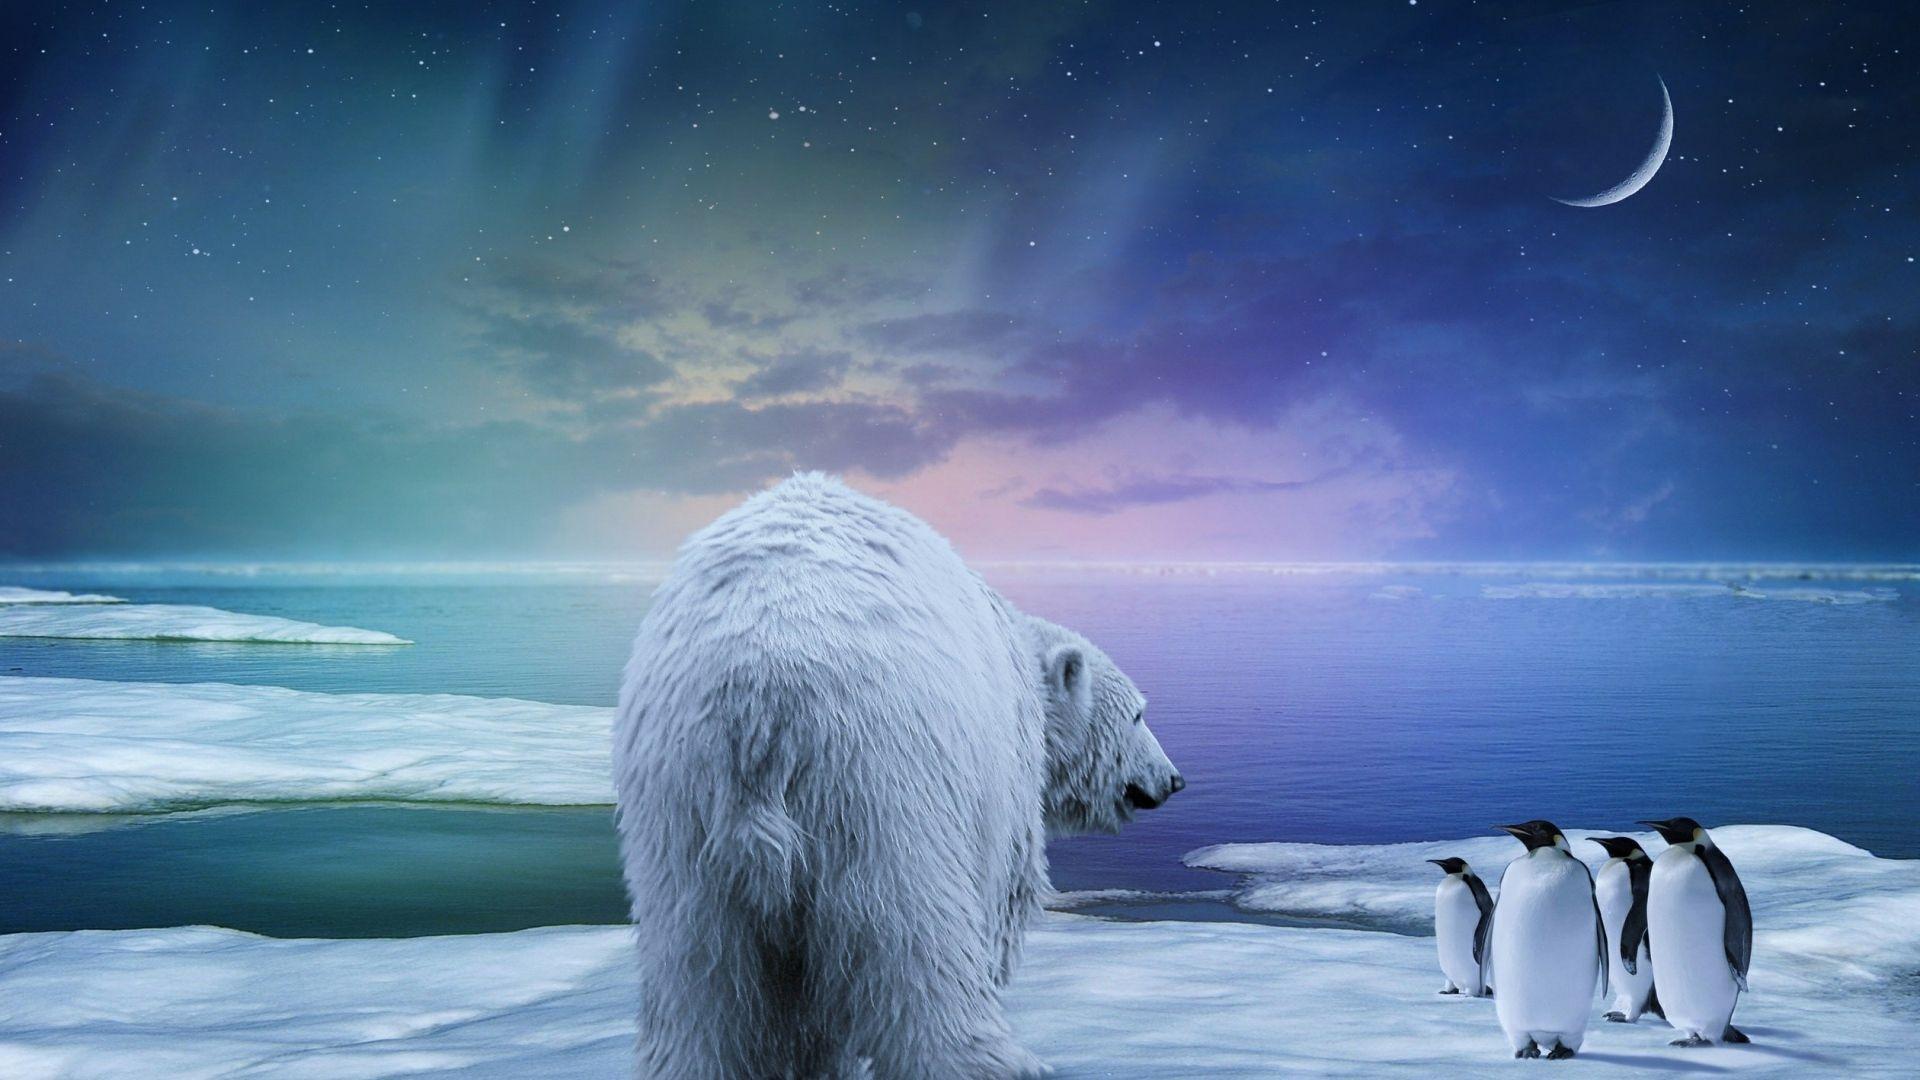 Download Wallpaper 1920x1080 Polar bear, Penguin, Northern lights